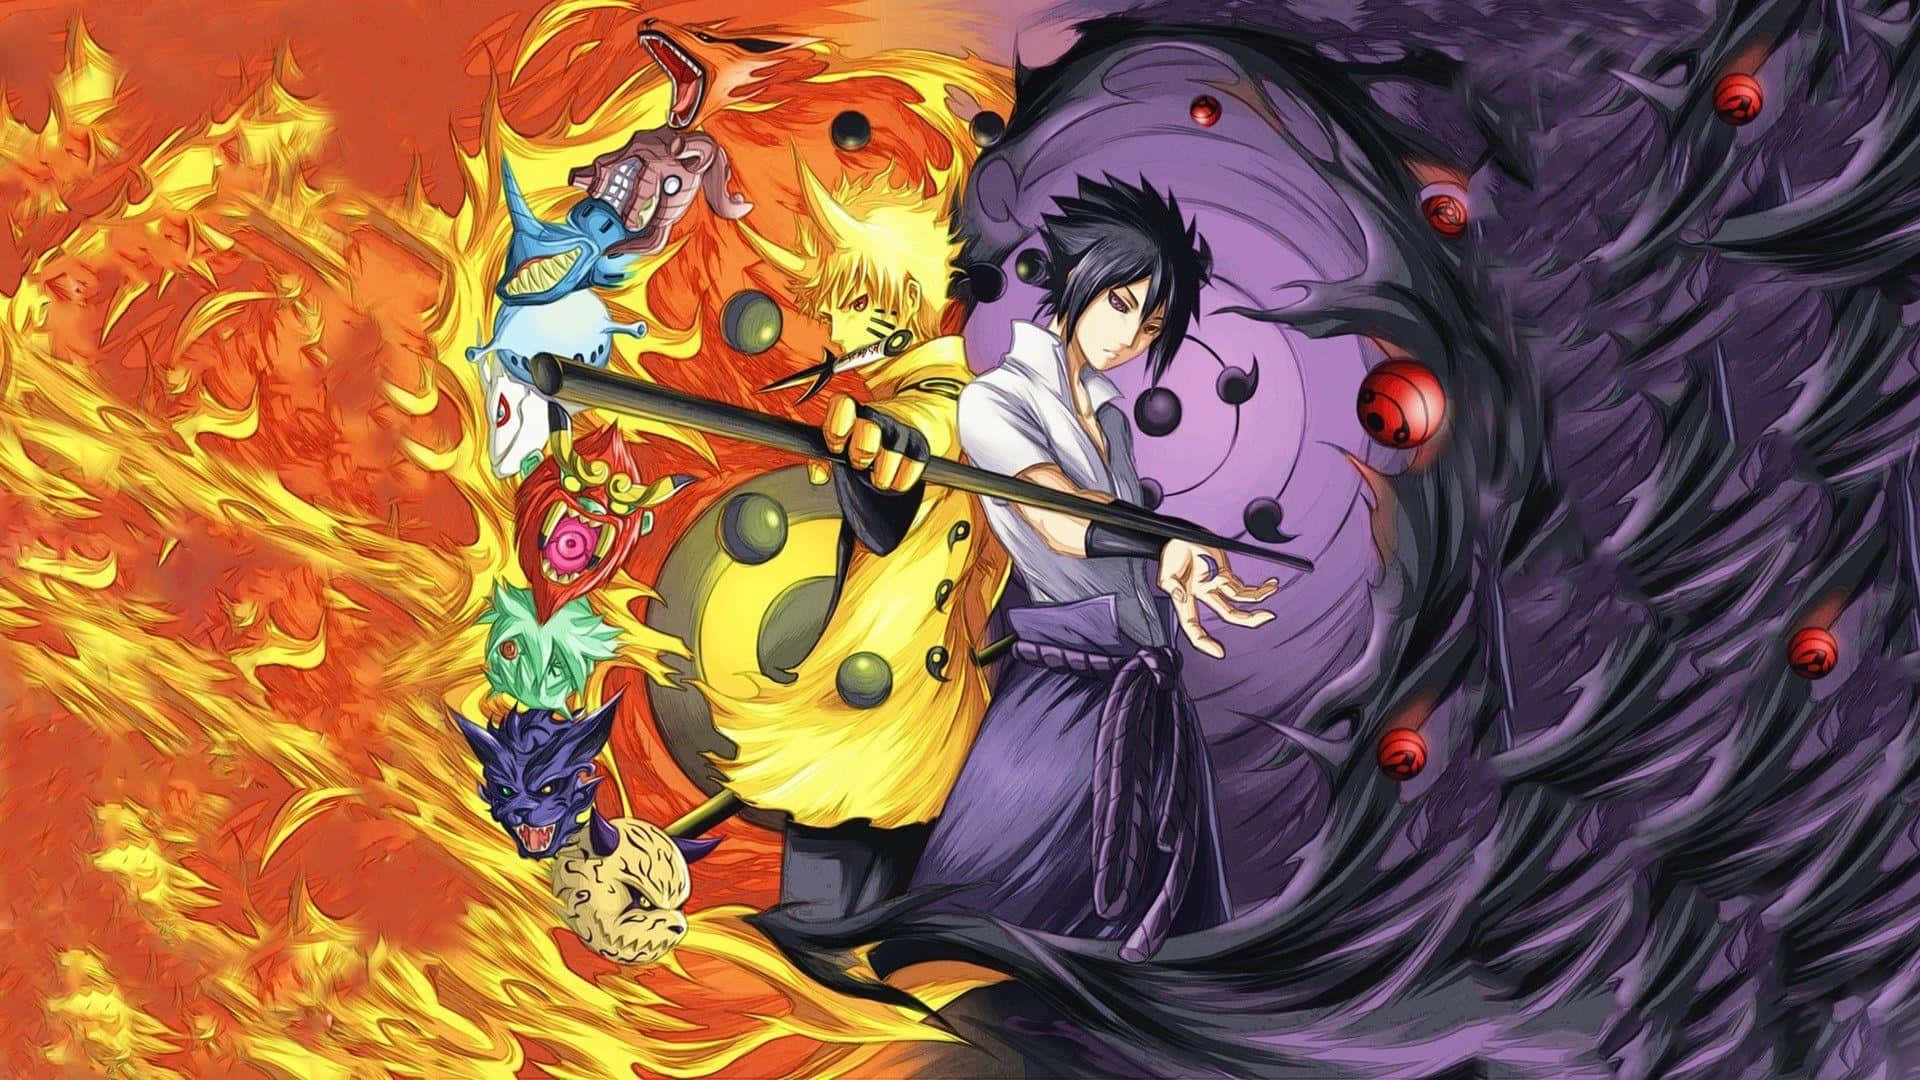 Sasuke and Naruto, longtime rivals and close friends.